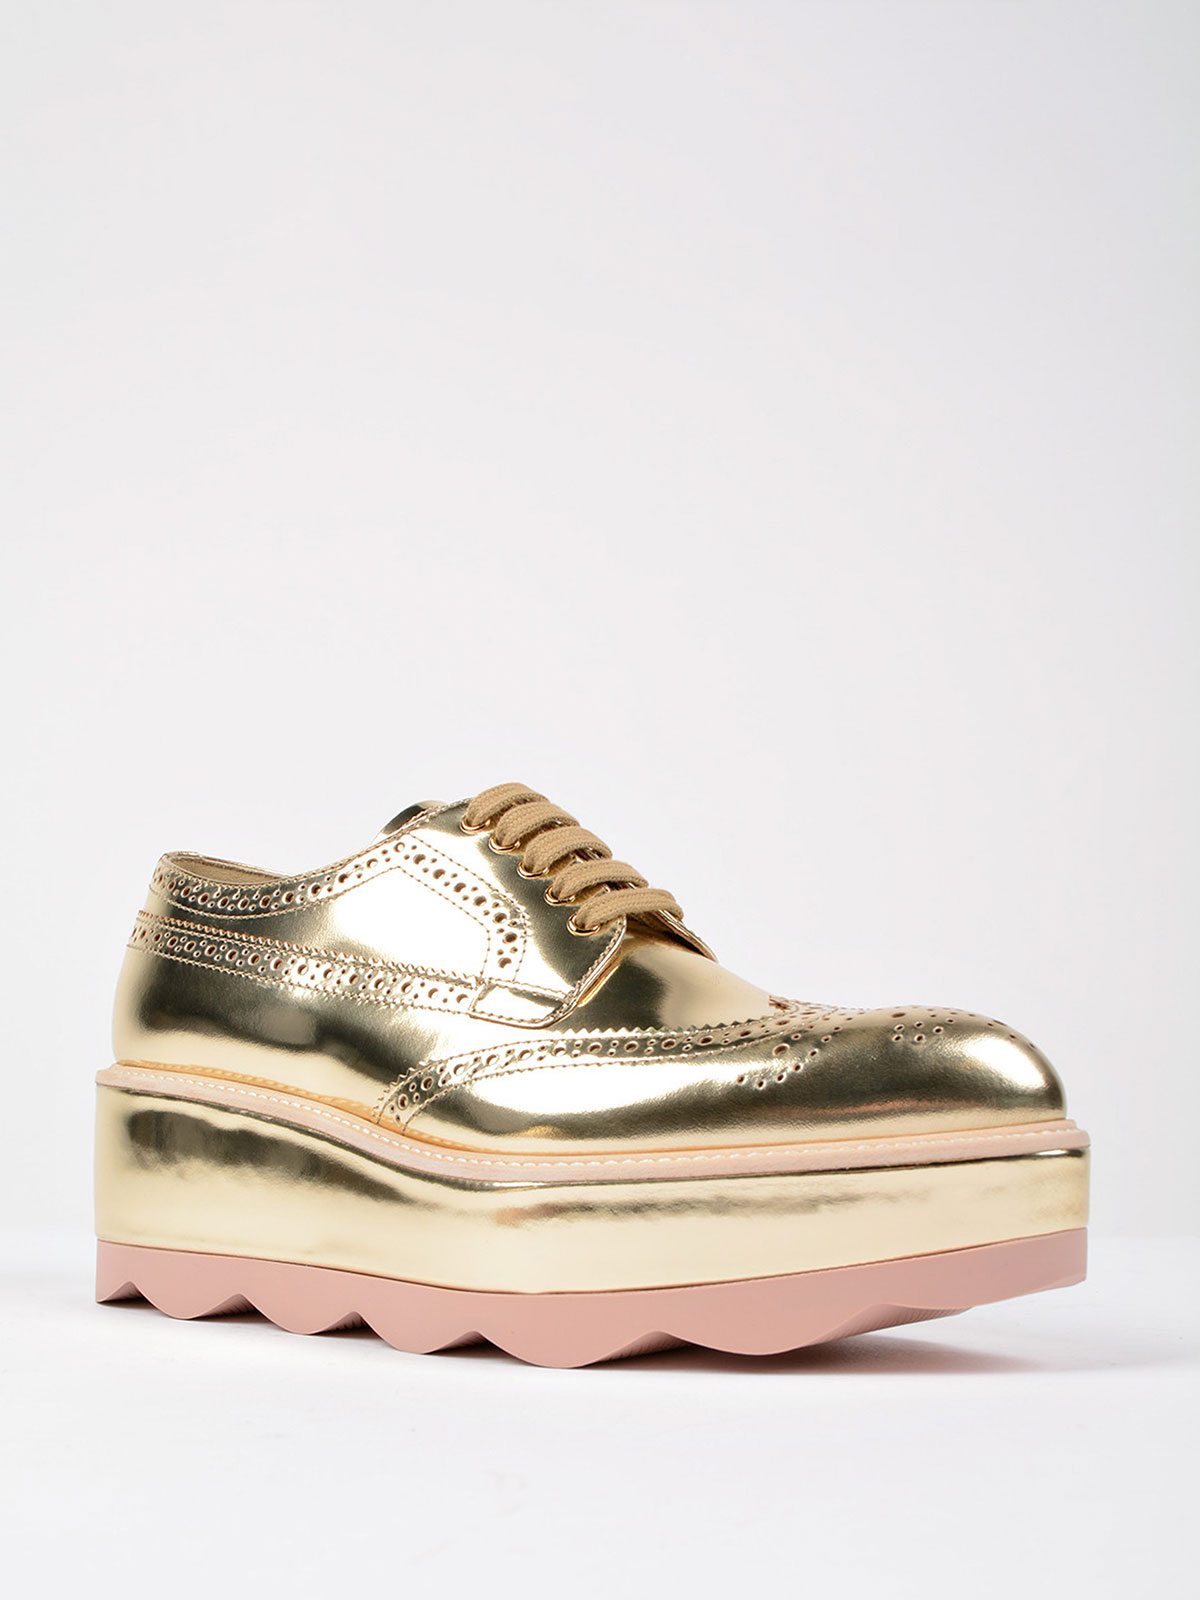 prada metallic shoes